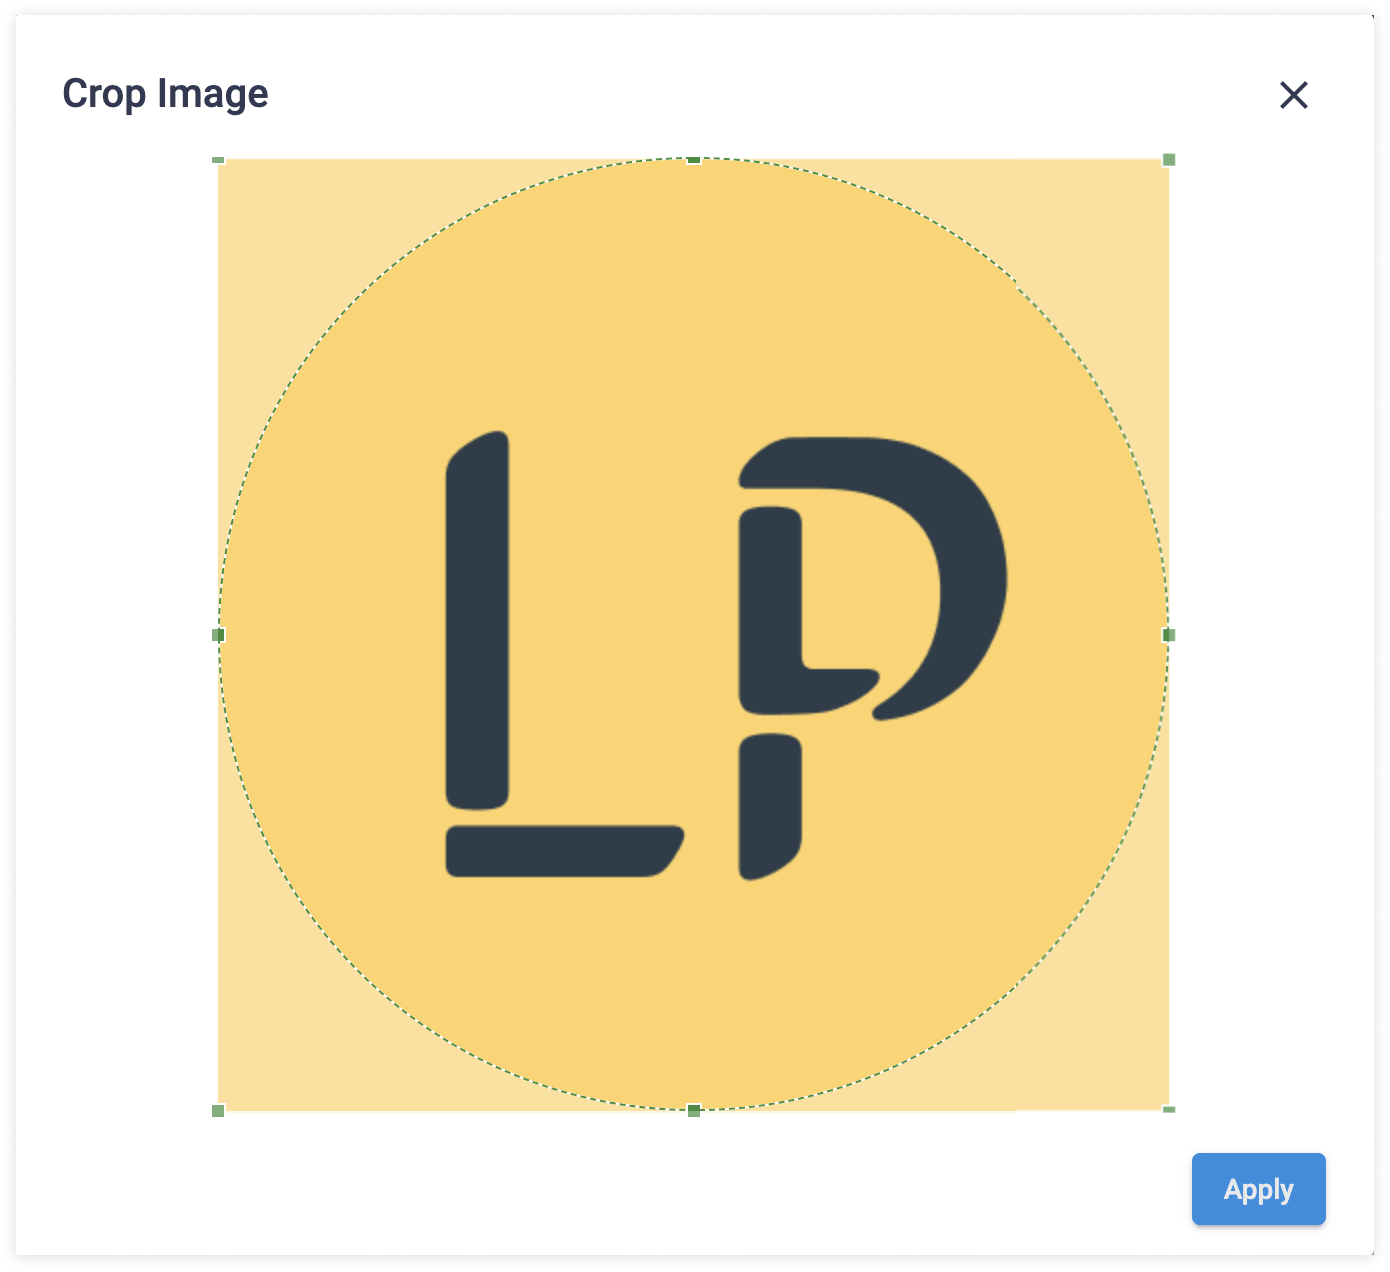 Company_crop_logo.png